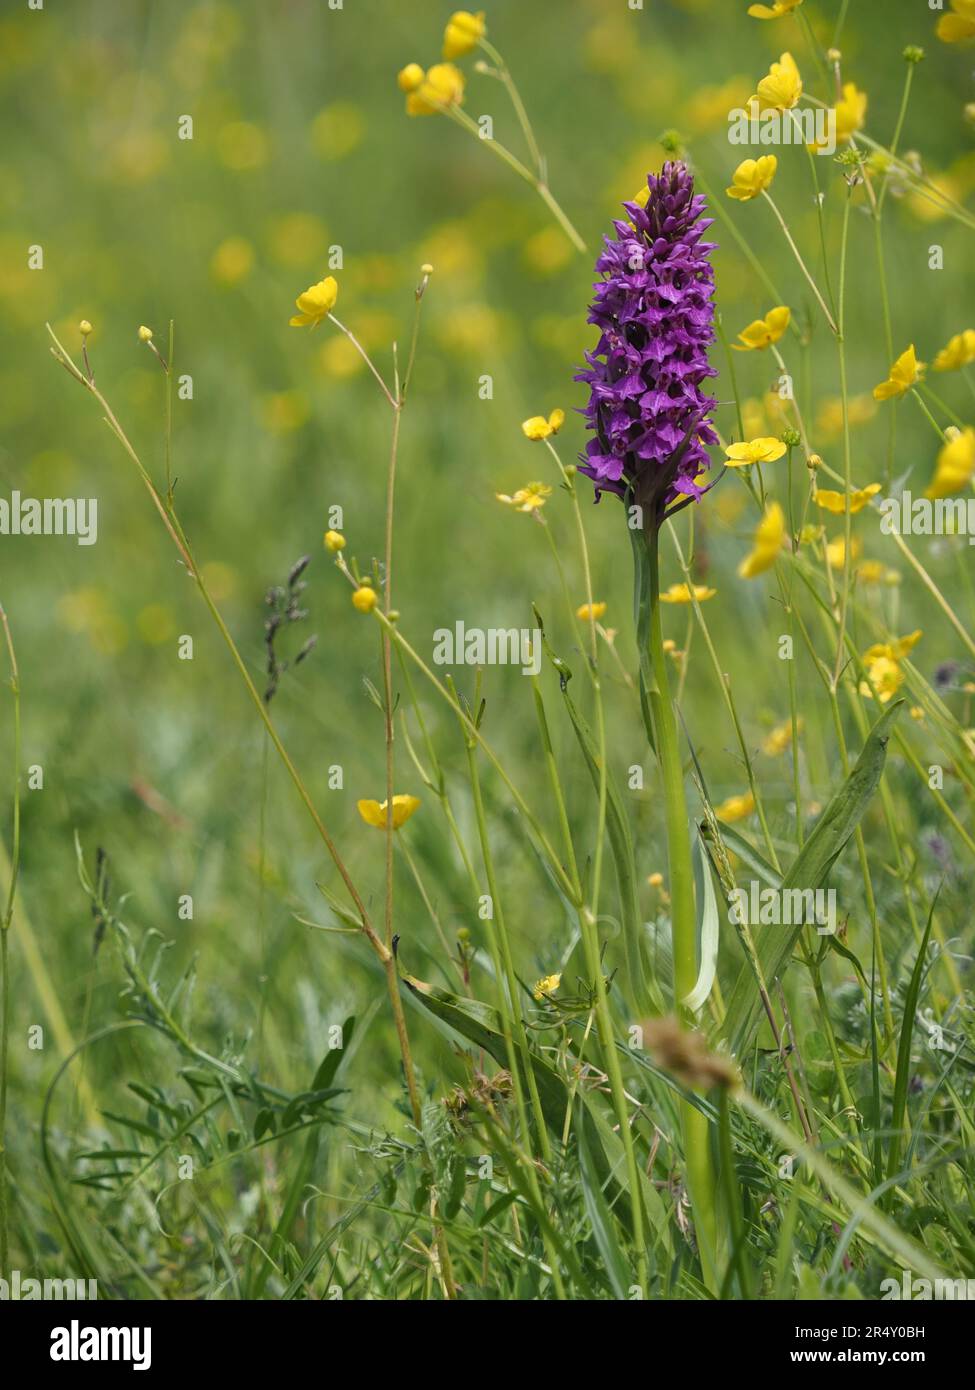 Marsh orchid growing alongside buttercups in wetland grasses Stock Photo